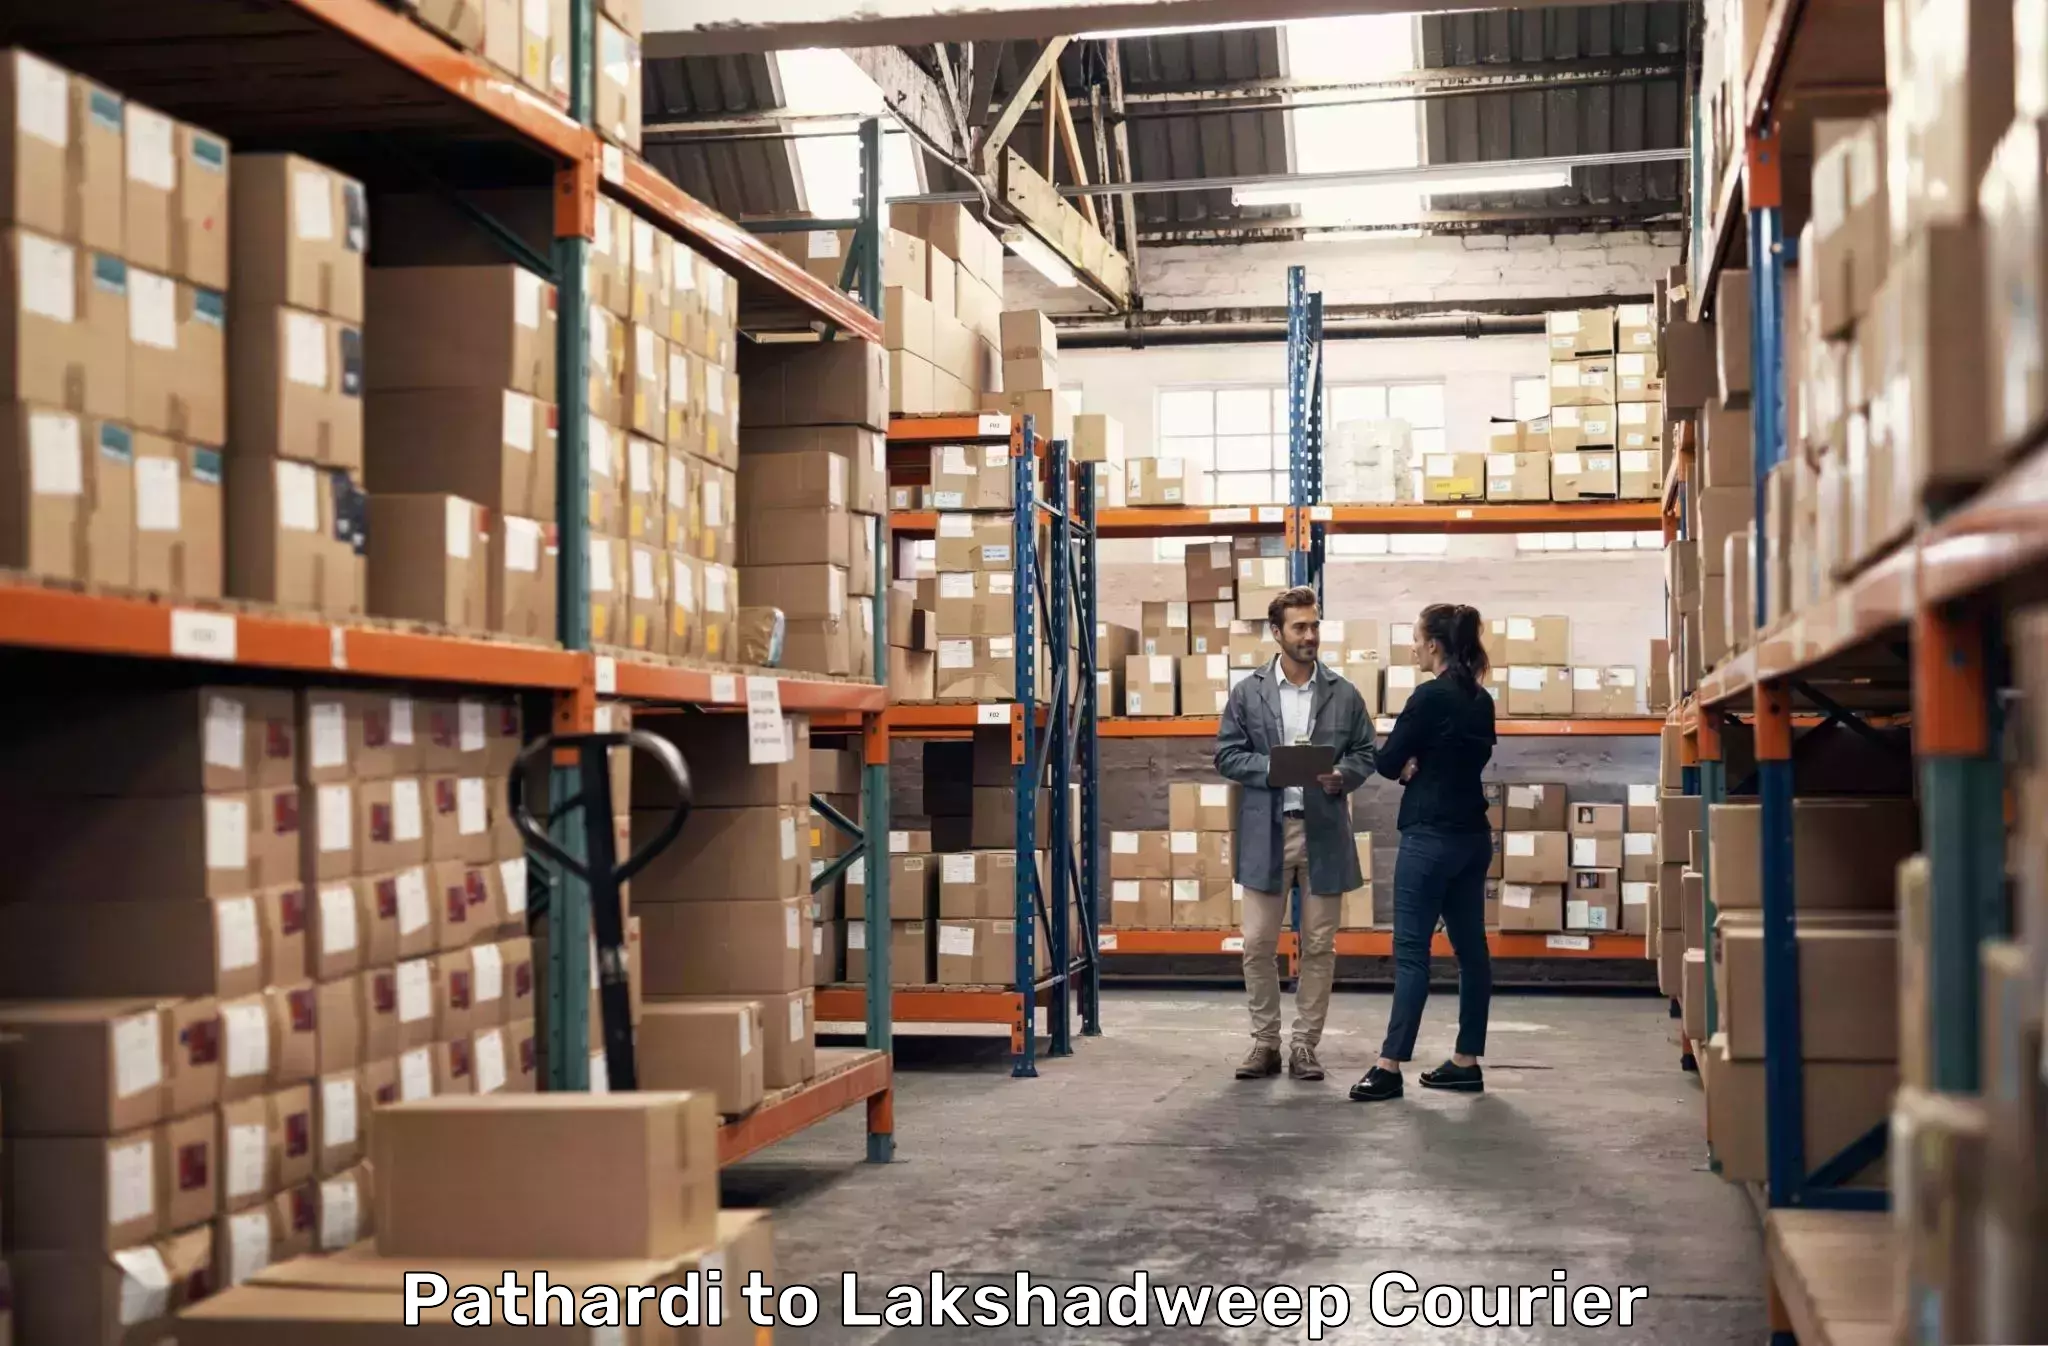 Logistics service provider Pathardi to Lakshadweep